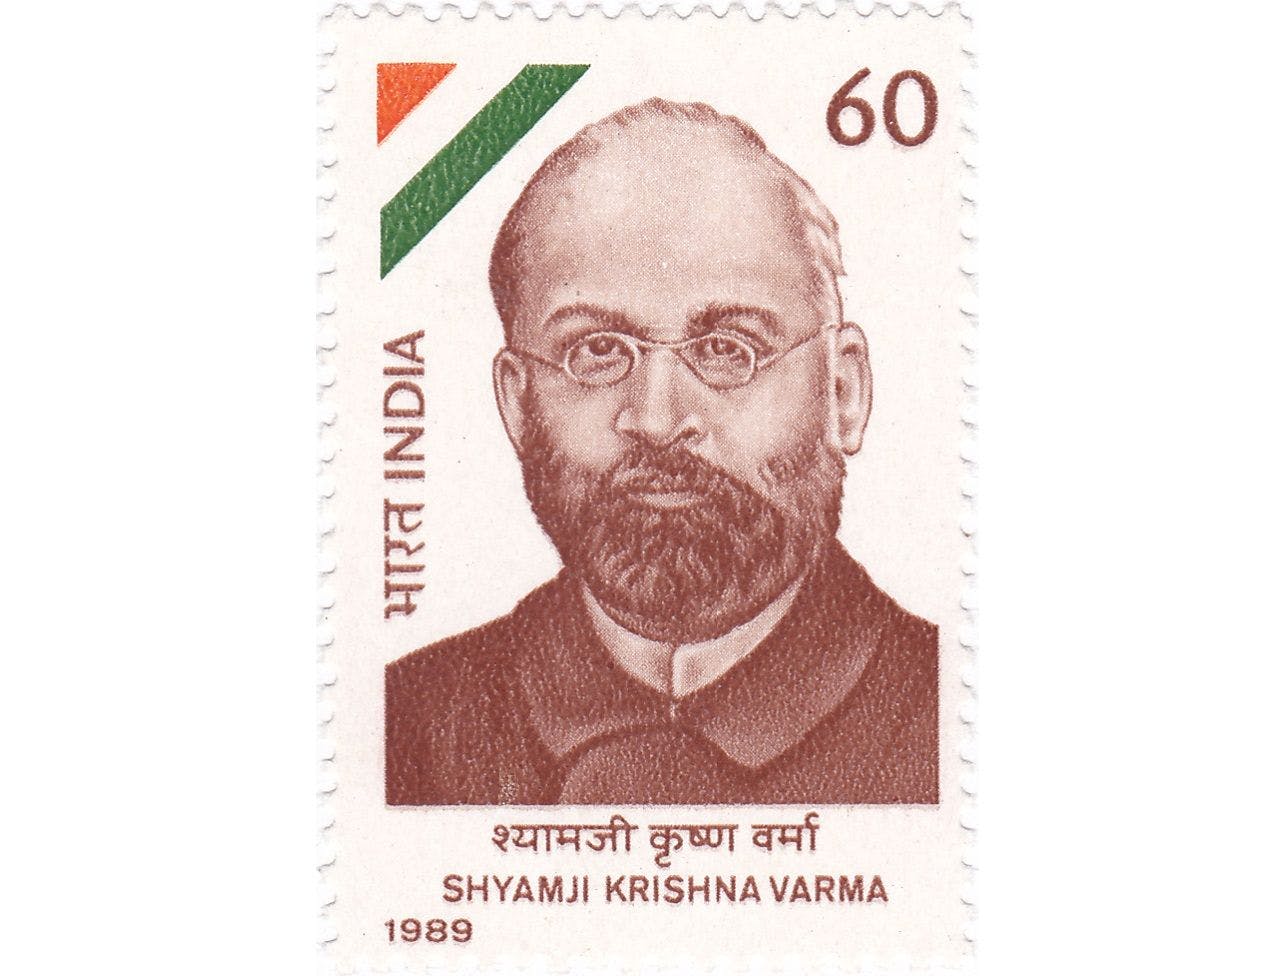 Stamp issued in honour of Shyamji Krishna Varma